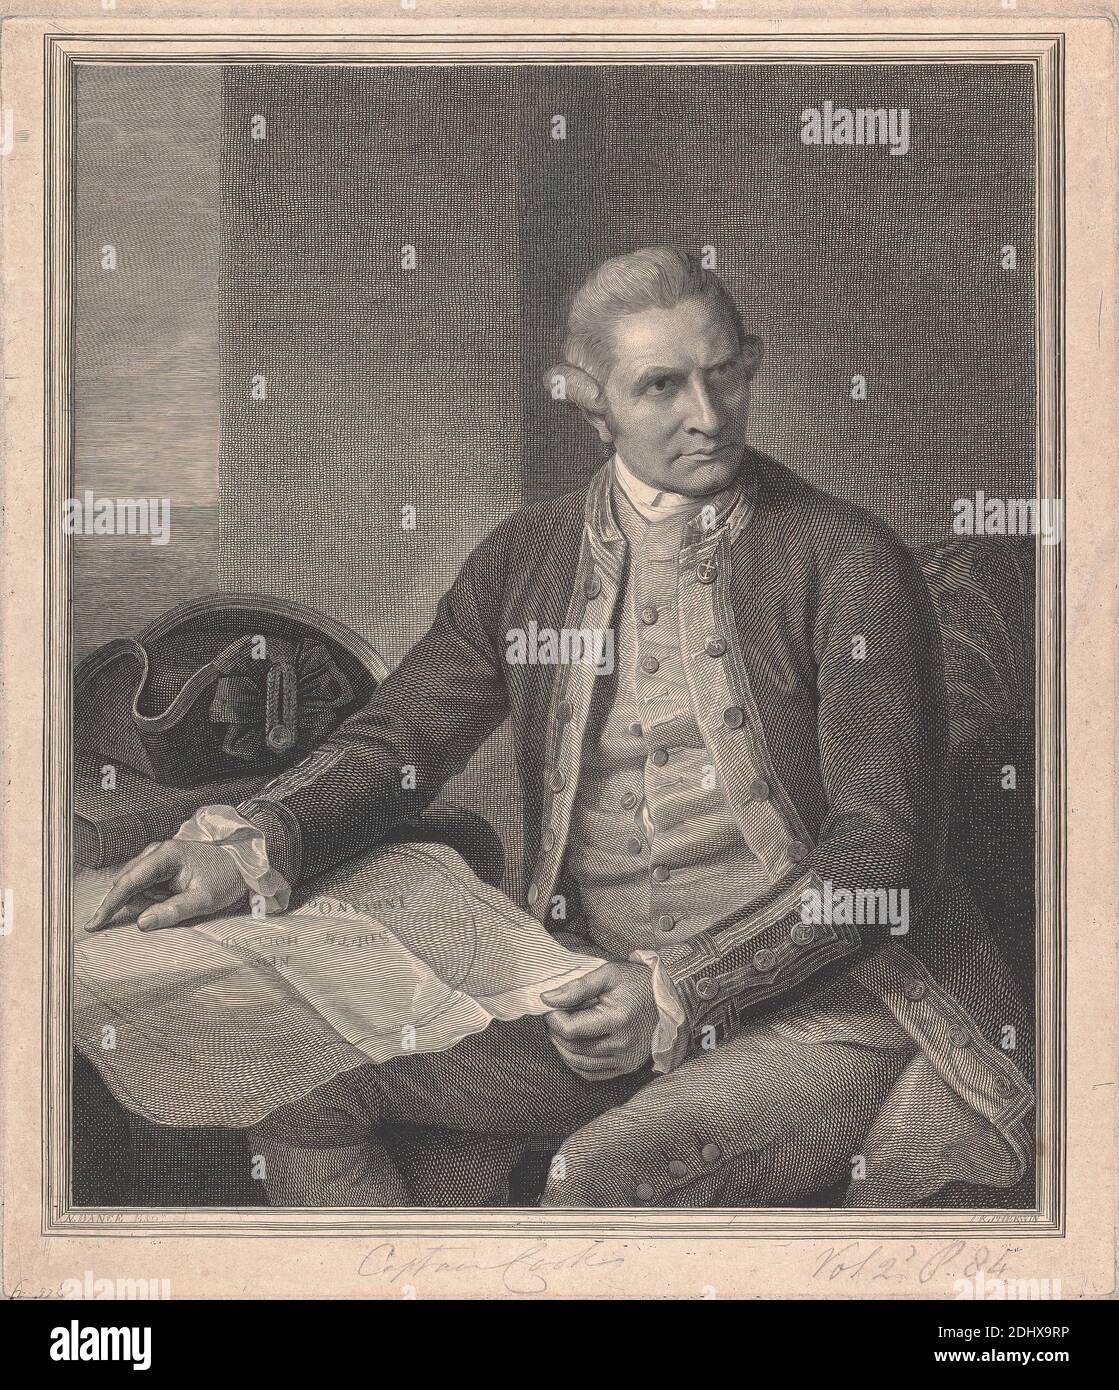 Capitán James Cook, John Keyse Sherwin, c.1751–1790, británico, después de Nathaniel Dance RA, 1735–1811, británico, 1784, grabado de líneas en moderadamente grueso, moderadamente texturizado, crema, papel laico, Hoja: 12 × 10 3/8 pulgadas (30.5 × 26.4 cm), placa: 11 5/8 × 10 1/8 pulgadas (29.5 × 25.7 cm), e imagen: 10 3/8 × 8 3/4 pulgadas (26.4 × 22.2 cm Foto de stock